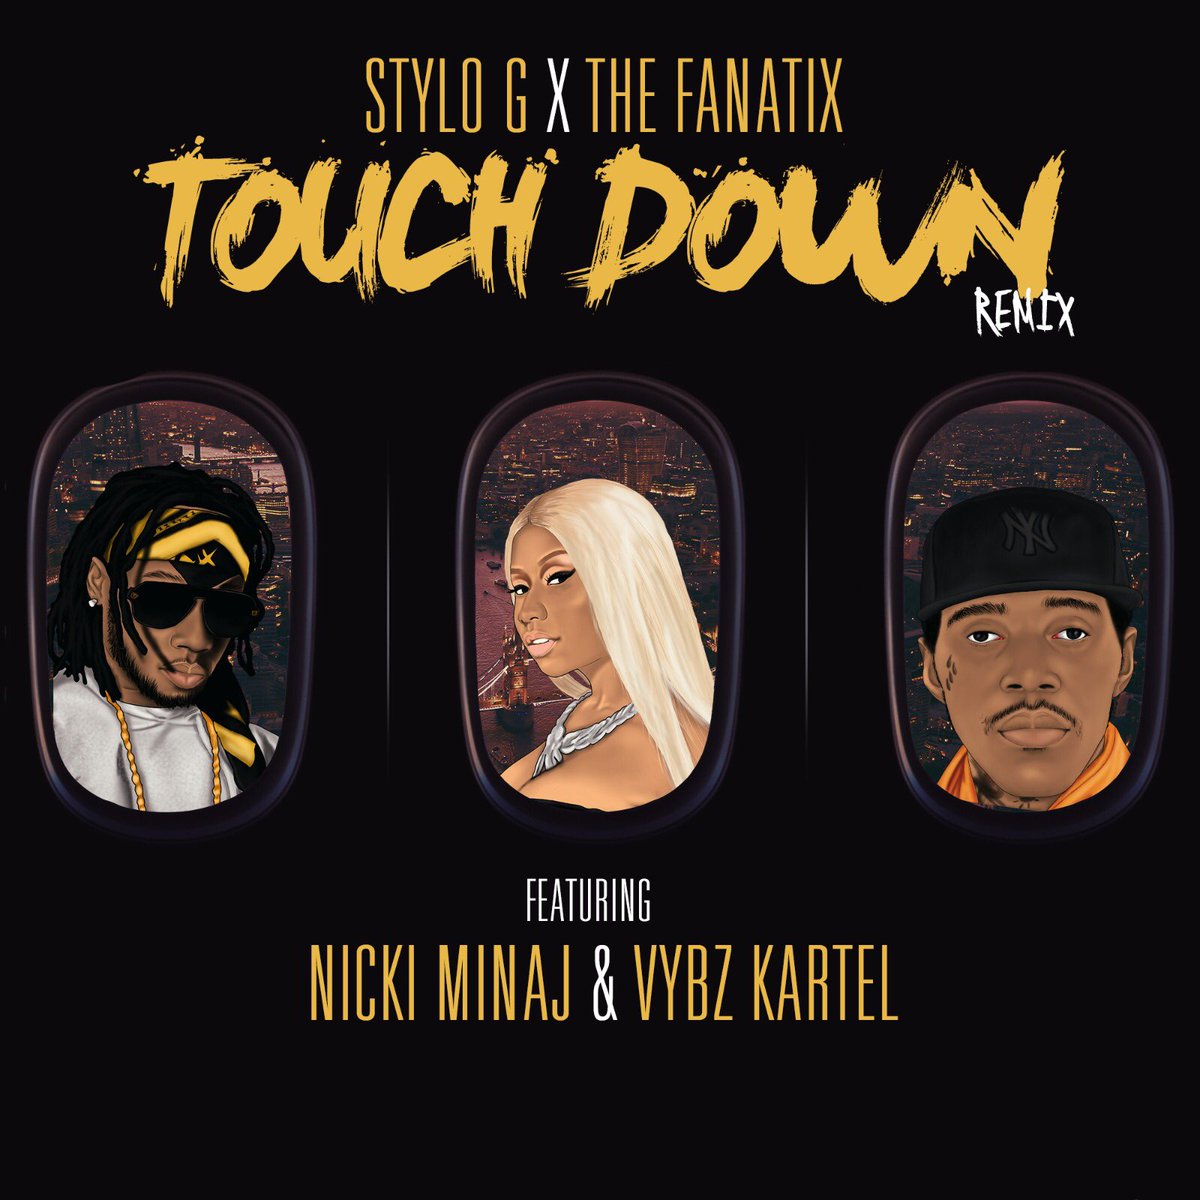 RT @Stylog: #TouchDown #Remix Feat @NICKIMINAJ & @Vybz_Kartel 
Out Tomorrow 6/1218 https://t.co/vtWwnyLopC